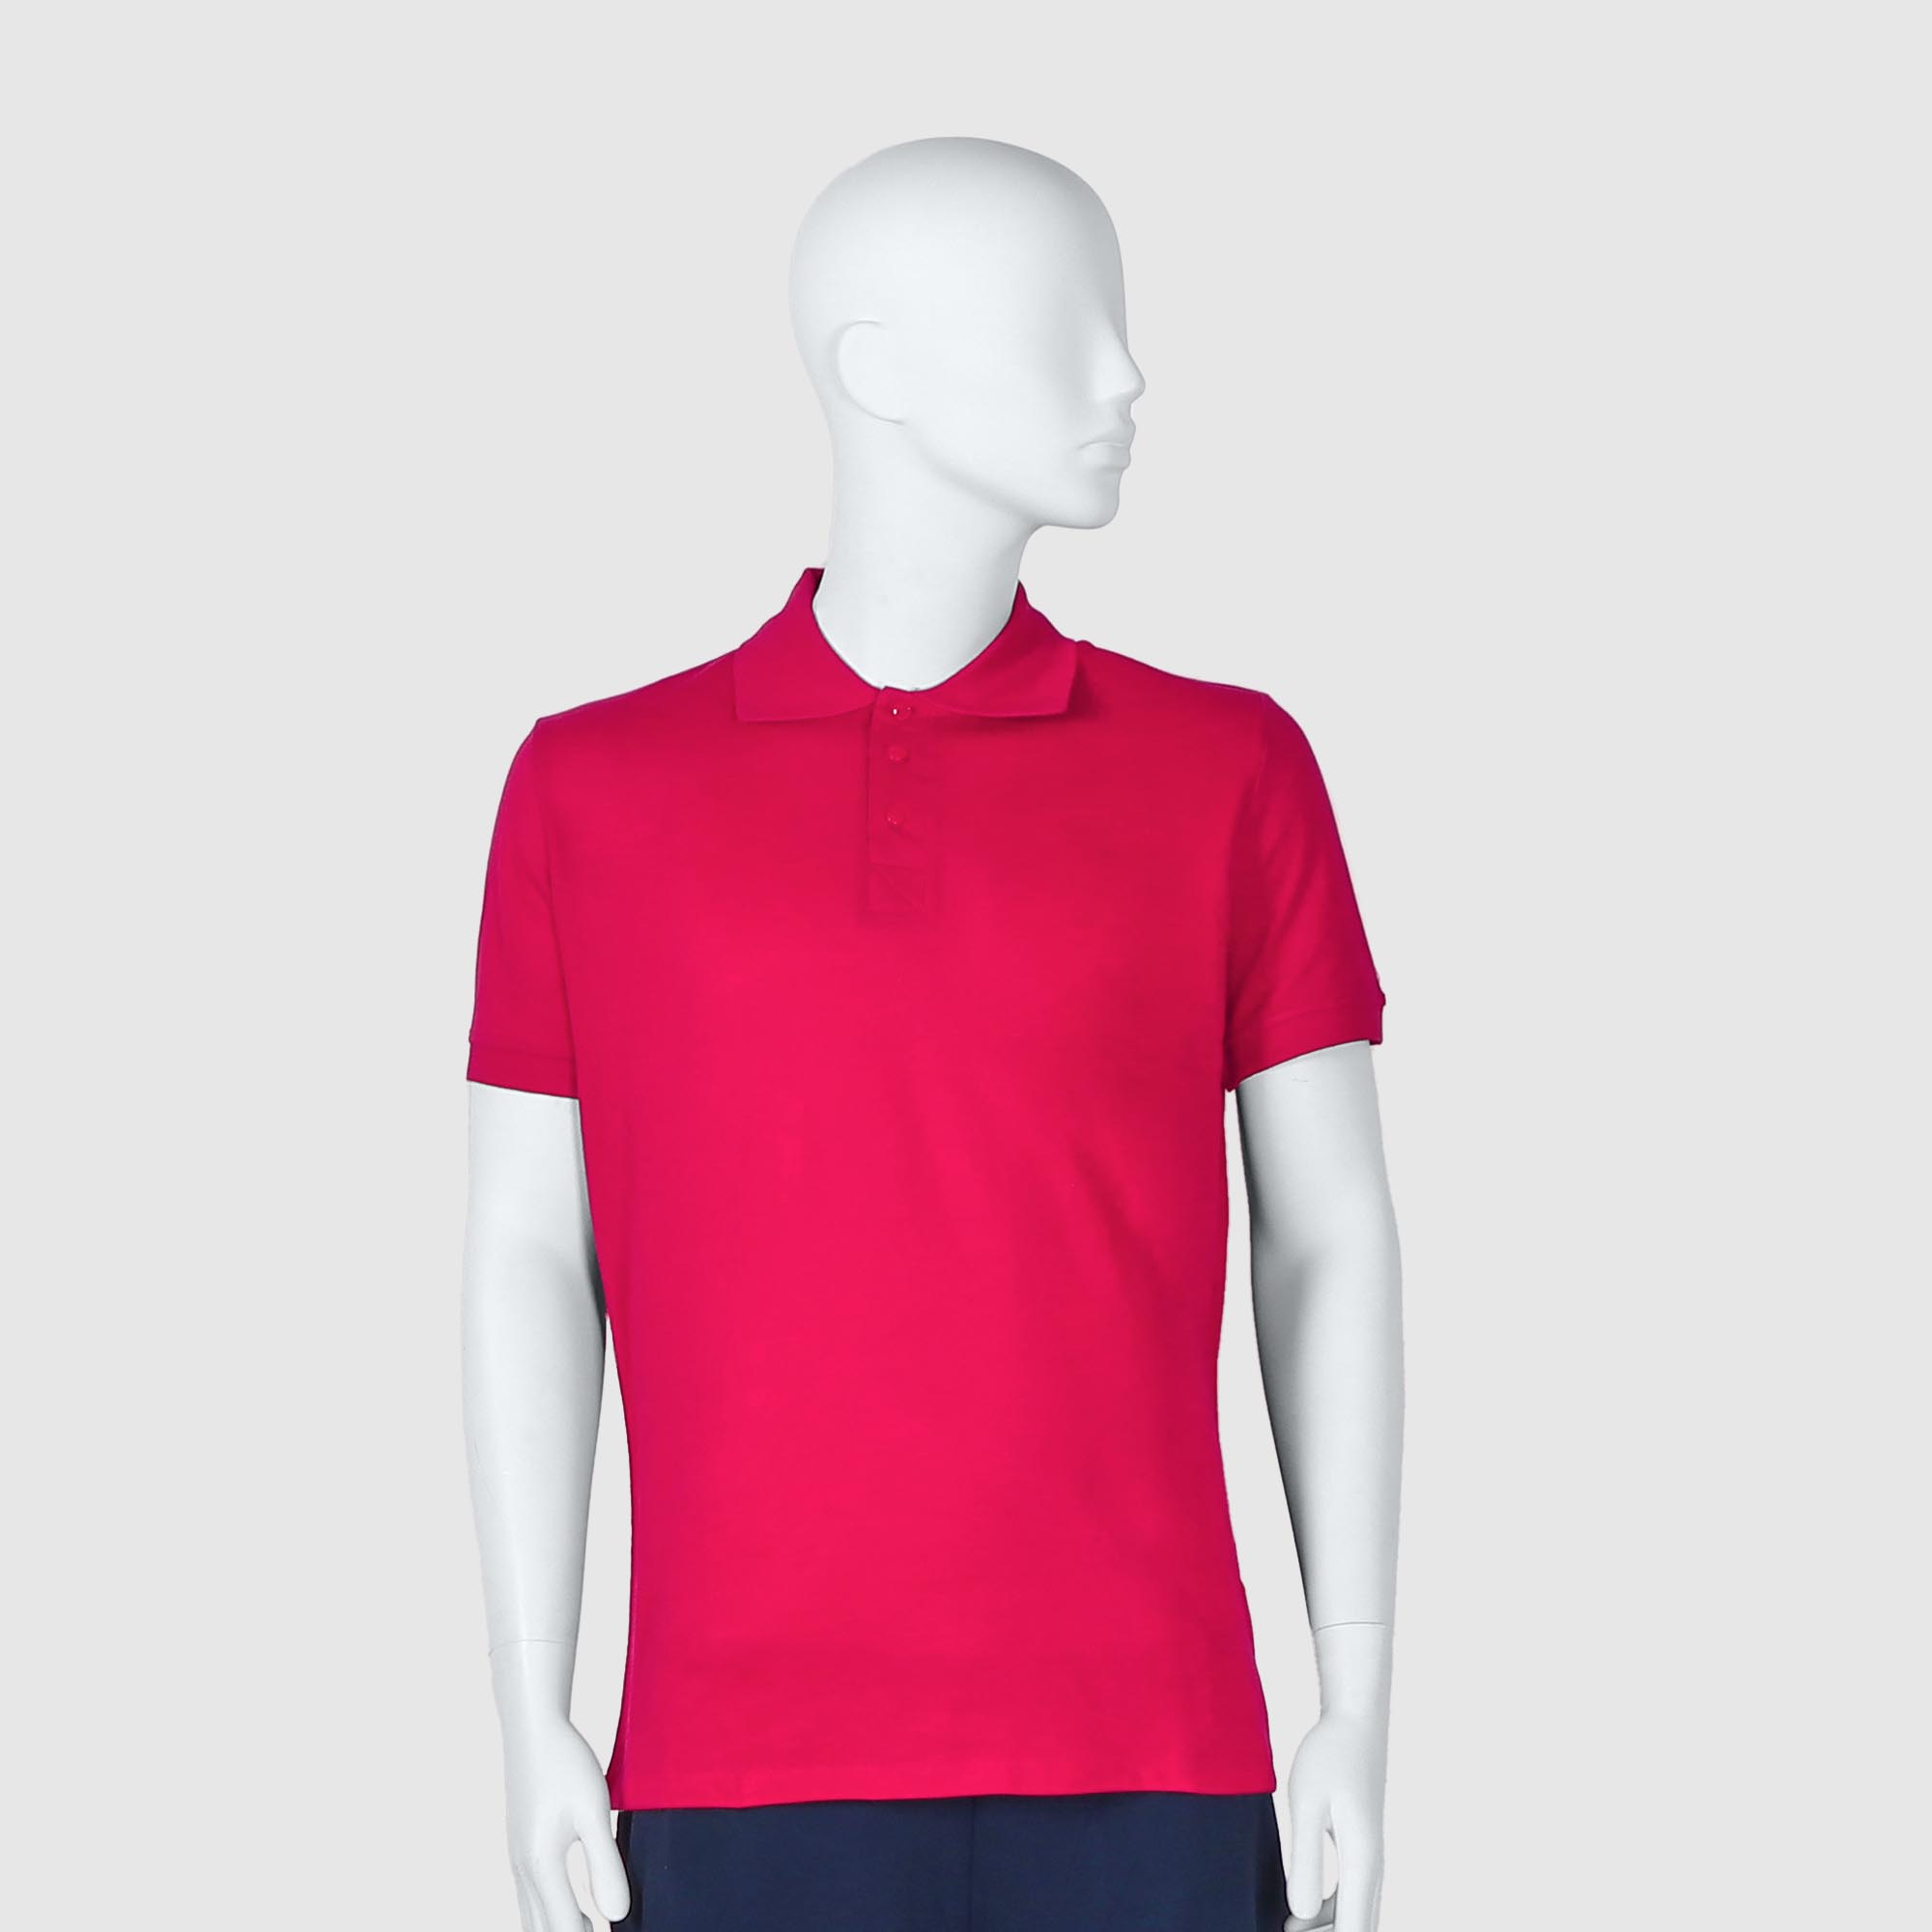 Мужская футболка-поло Diva Teks красная (DTD-08), цвет красный, размер 54-56